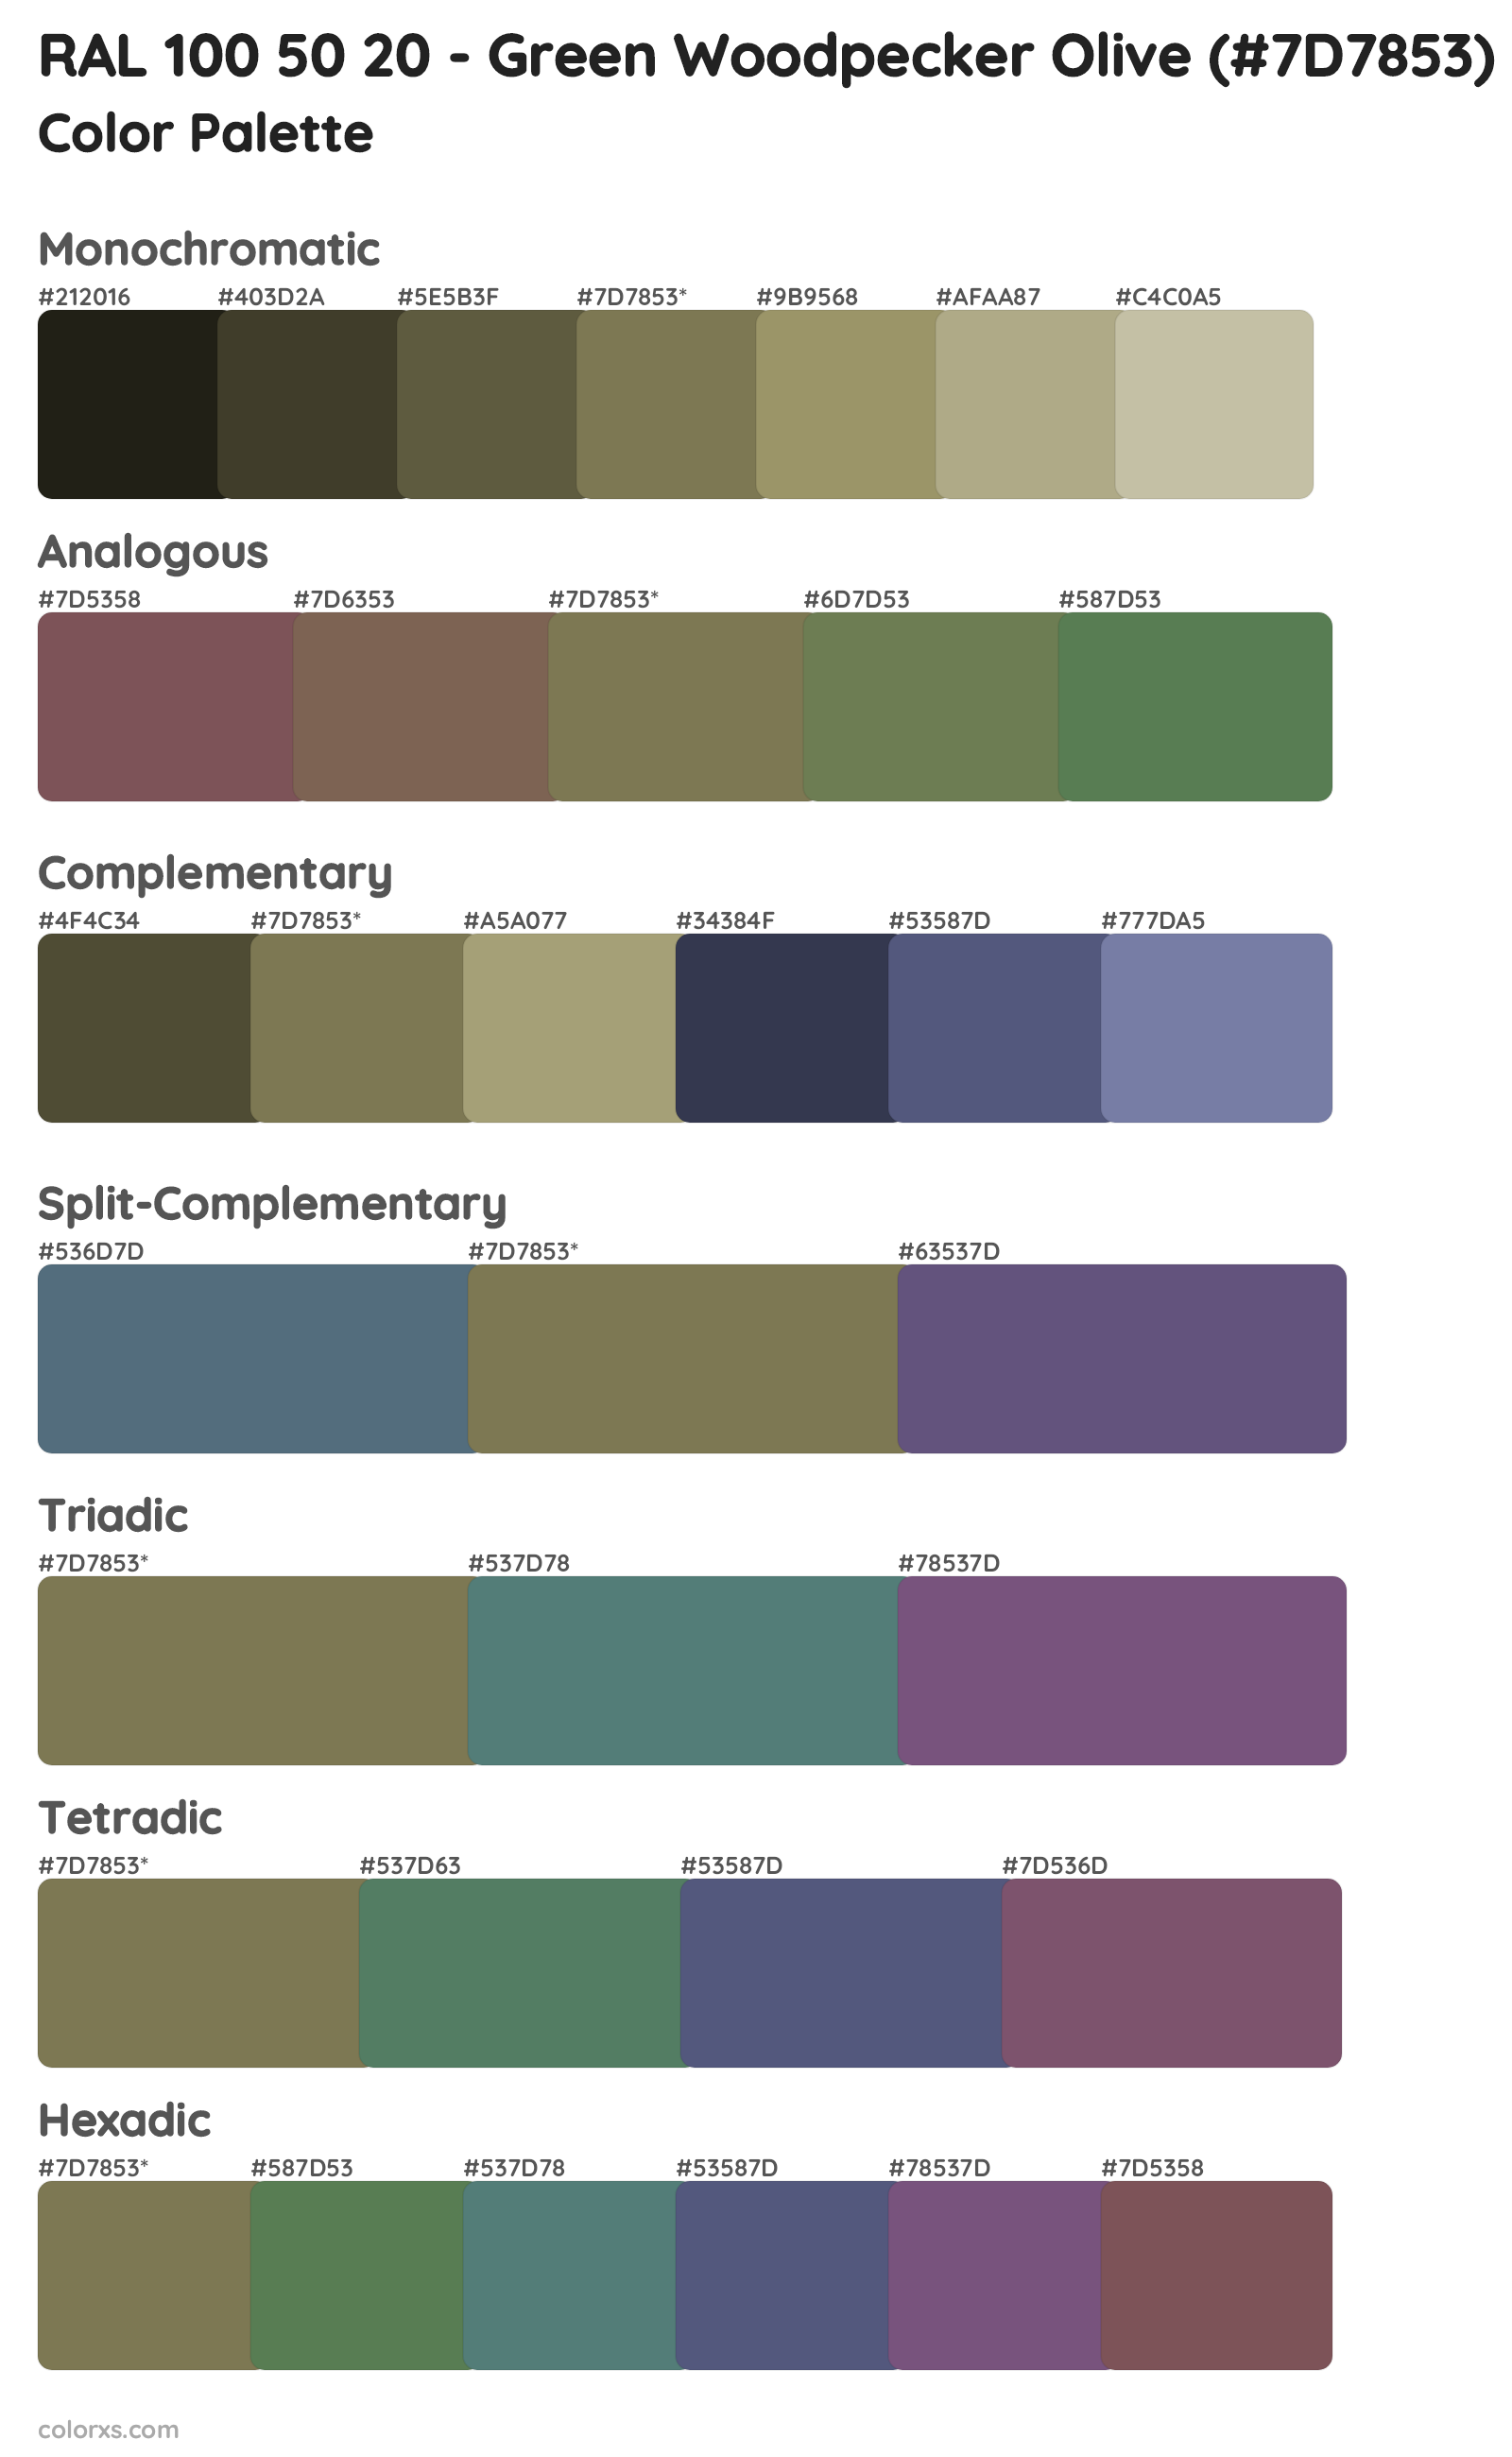 RAL 100 50 20 - Green Woodpecker Olive Color Scheme Palettes